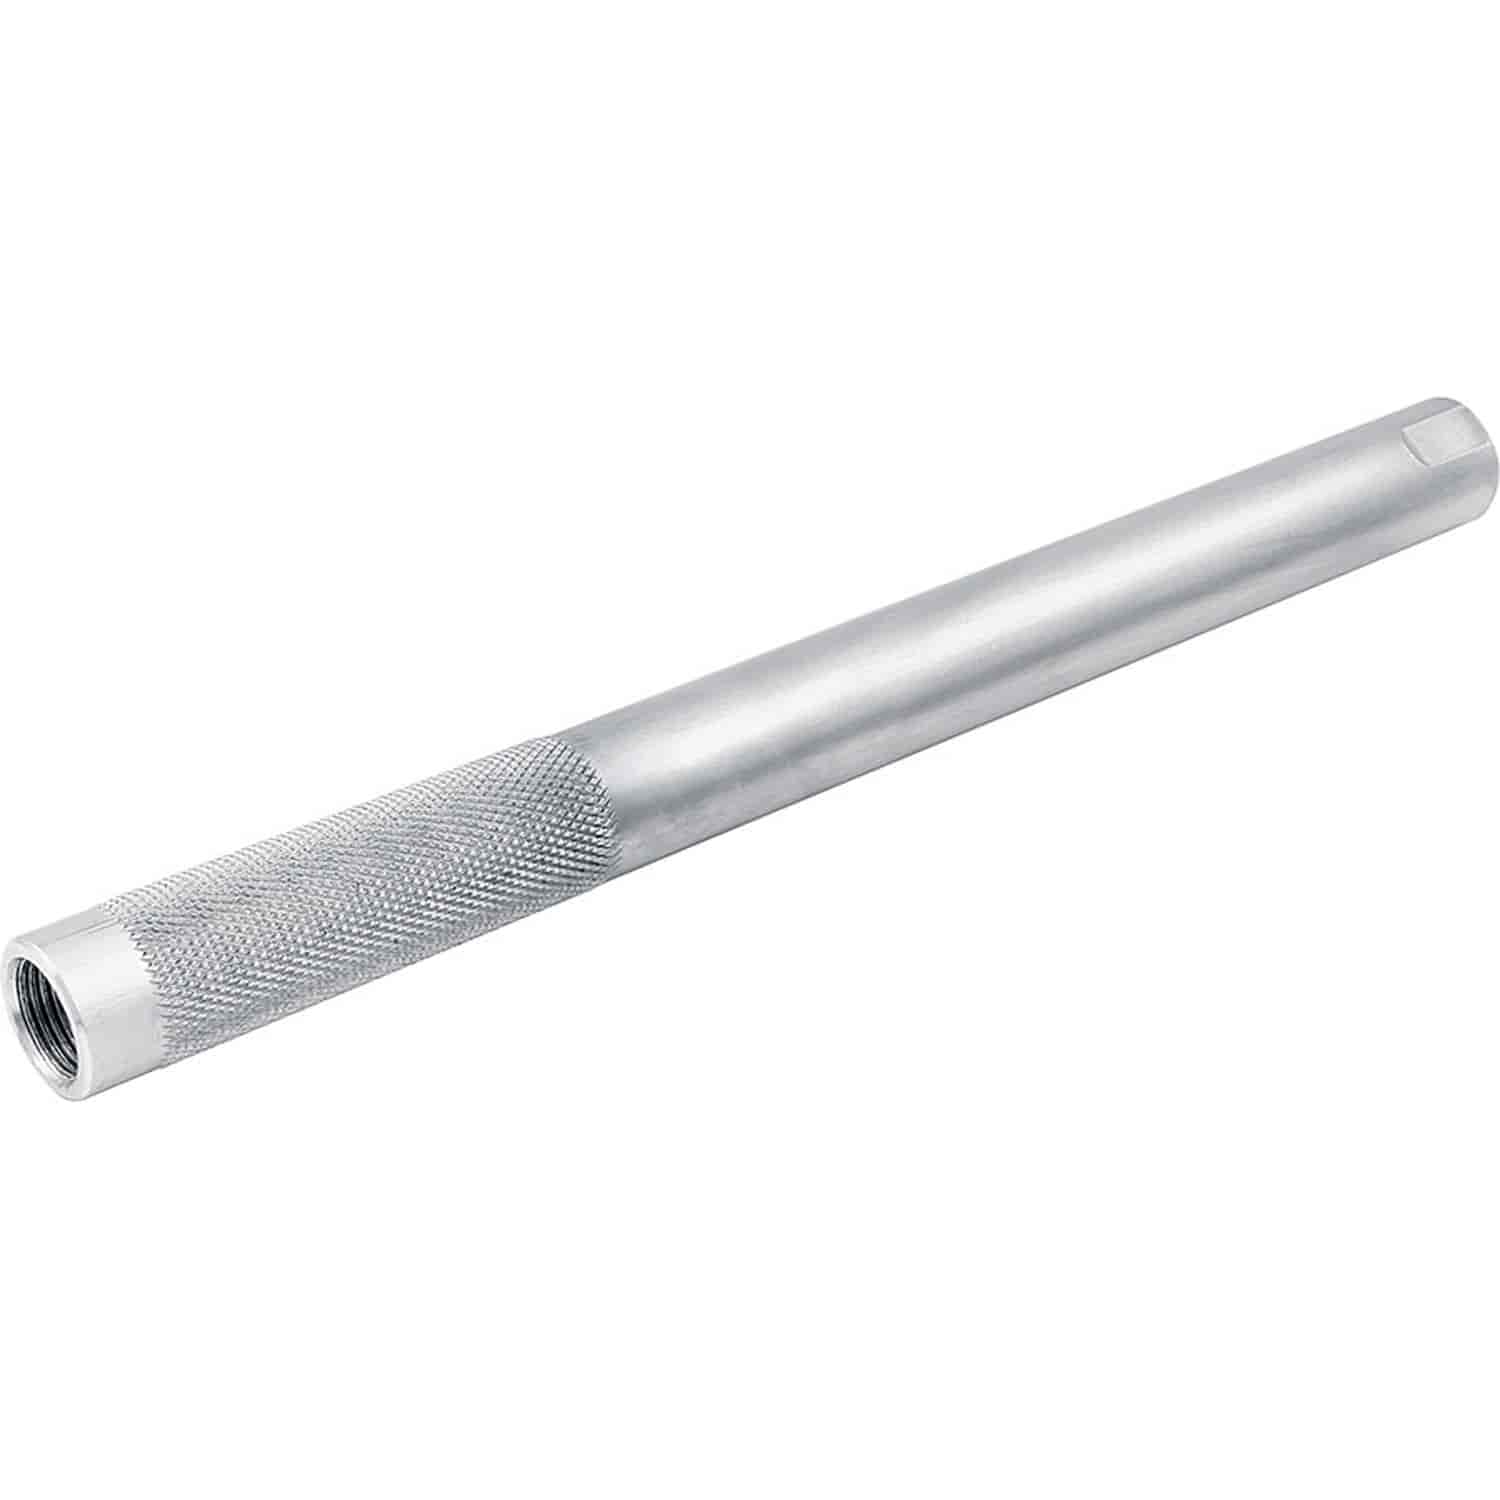 Swedged Aluminum Tie Rod Tube Length: 14"